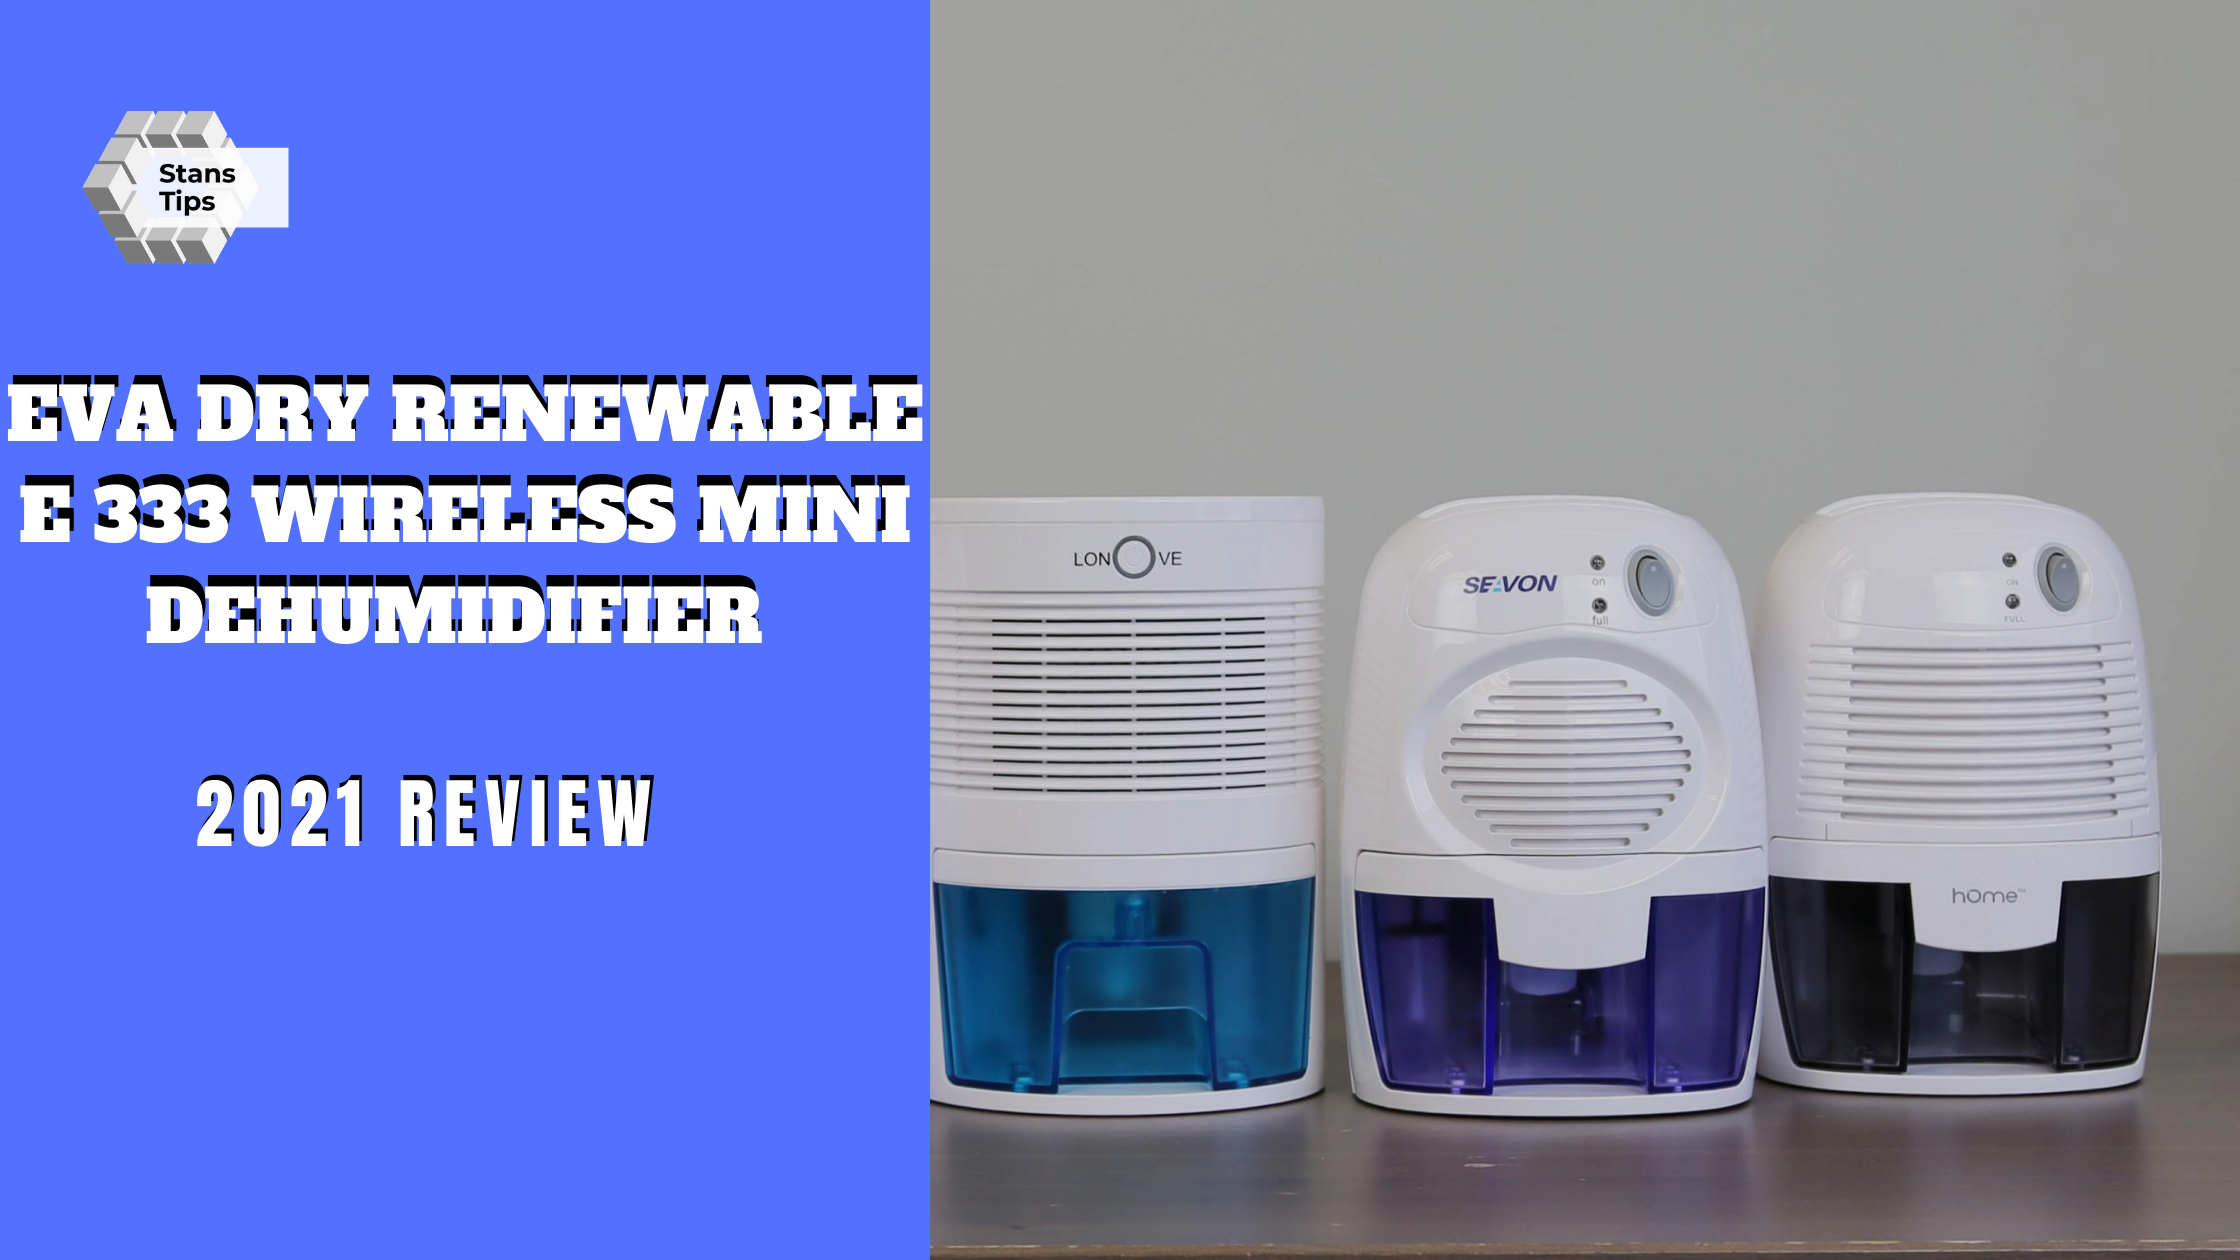 Eva dry renewable e 333 wireless mini dehumidifier review